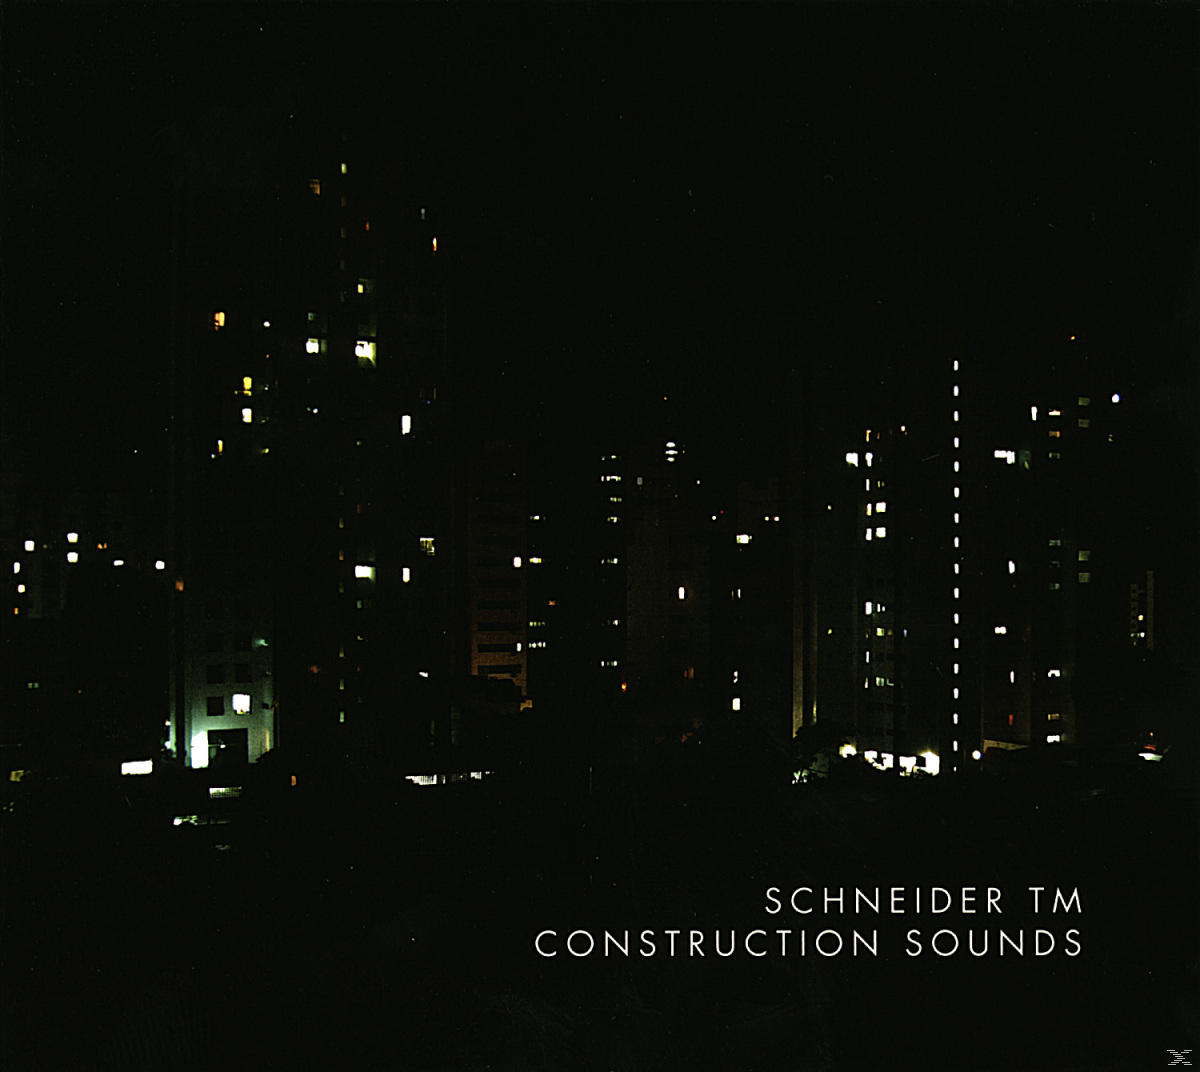 Schneider Tm (CD) - Sounds Construction -